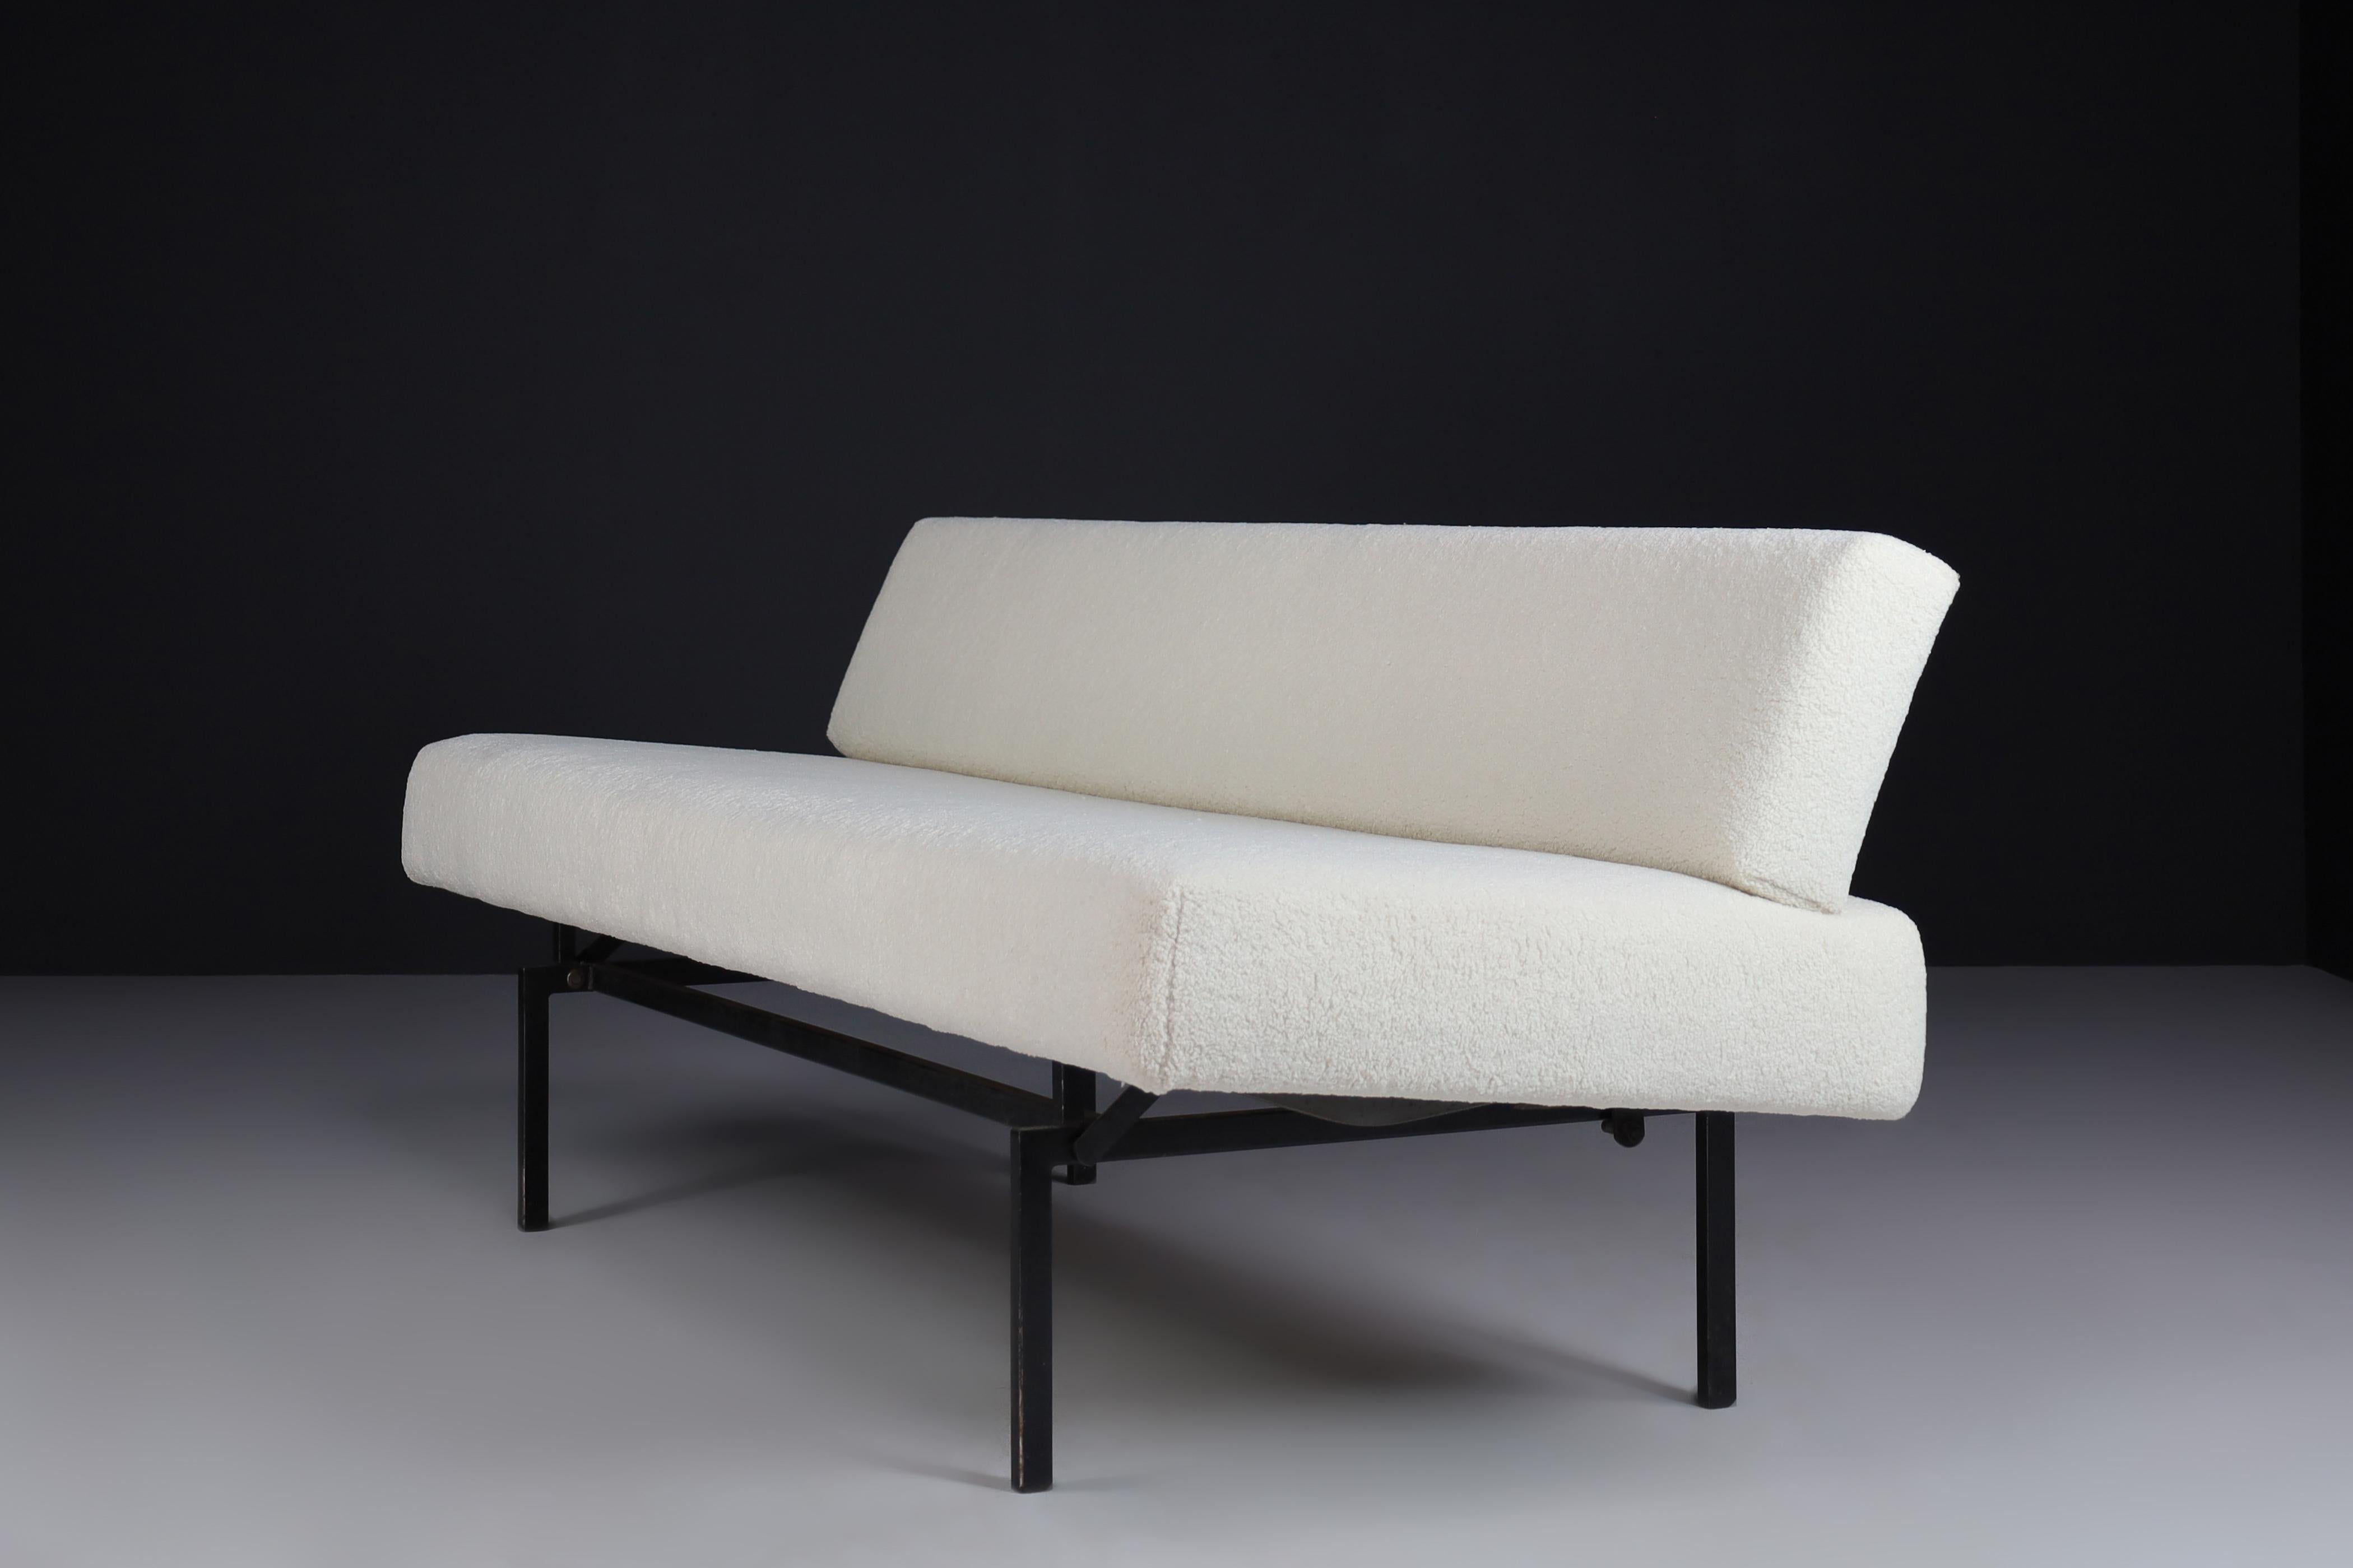 Mid-Century Modern Martin Visser Sofa or Sleeper Sofa for 't Spectrum in New Teddy Fabric, 1960s